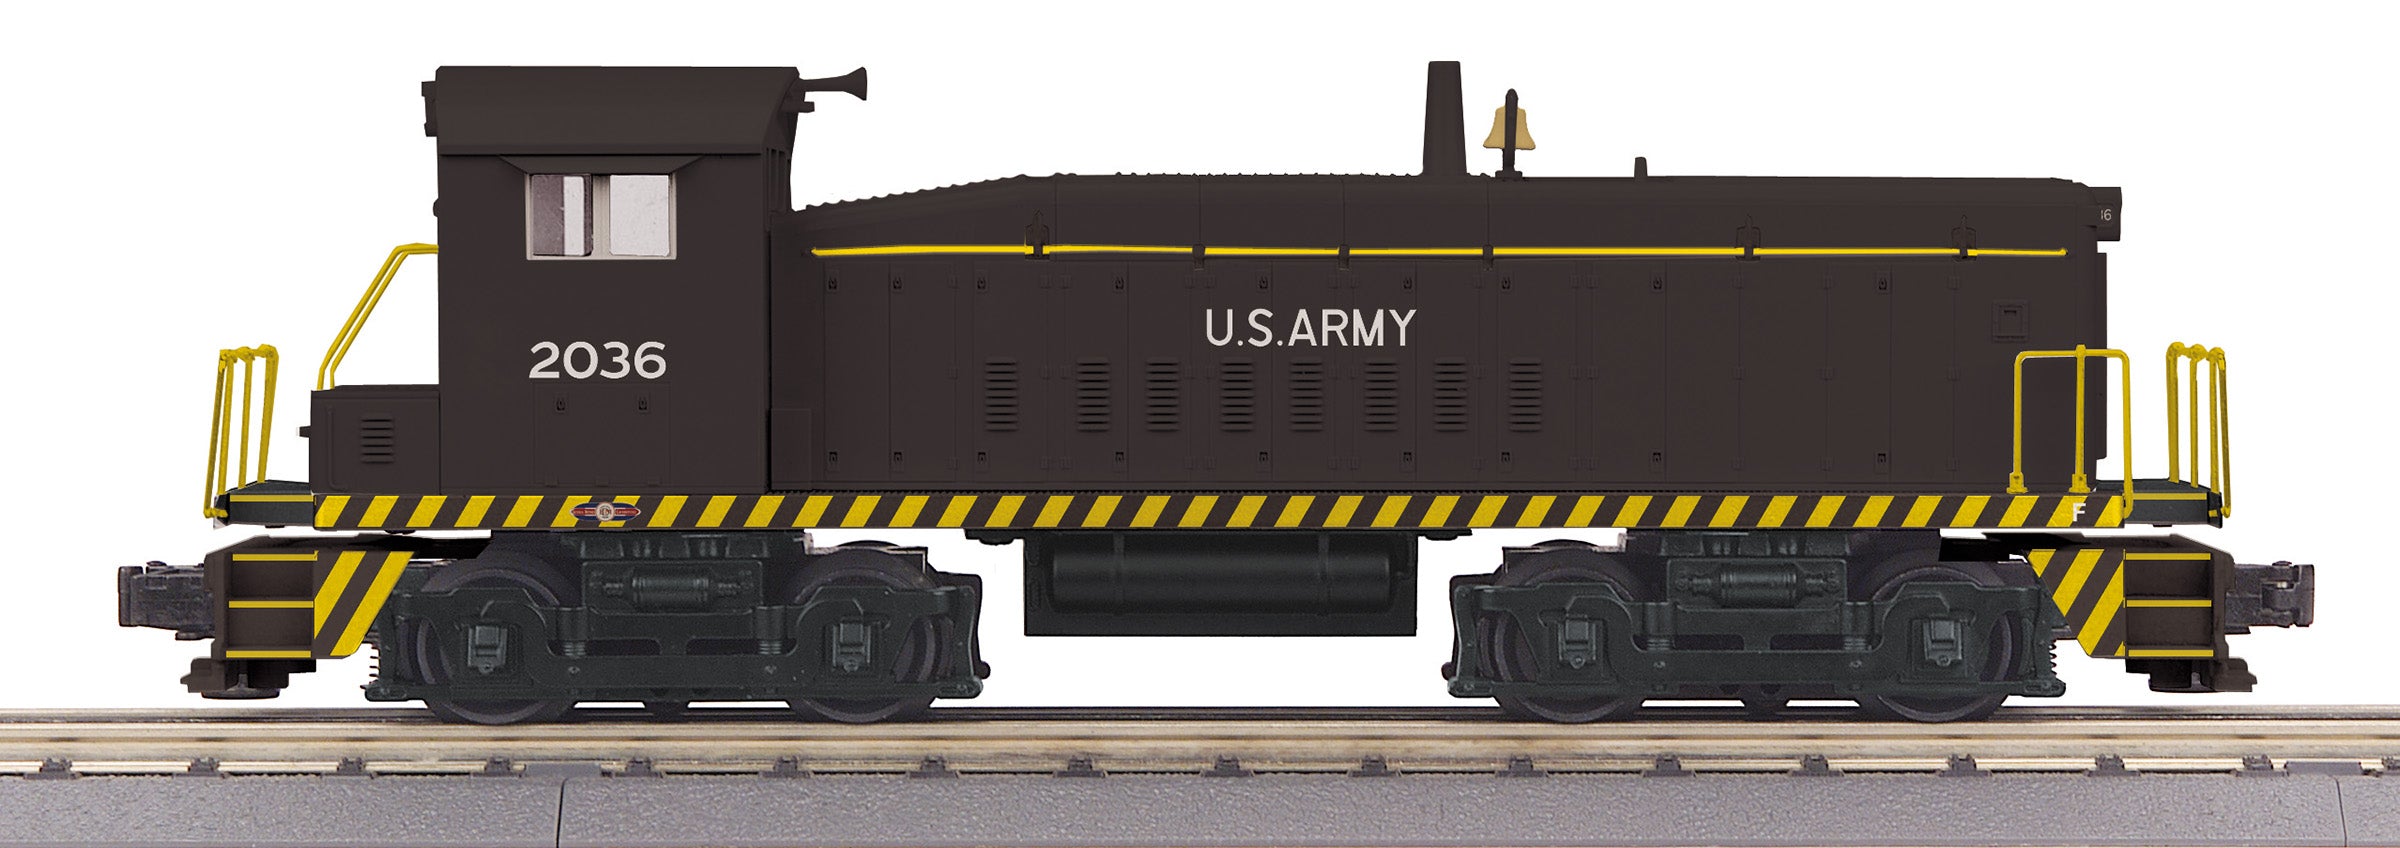 MTH 30-20917-1 - SW-8 Switcher Diesel Engine "U.S. Army" w/ PS3 #2036 - Custom Run for MrMuffin'sTrains